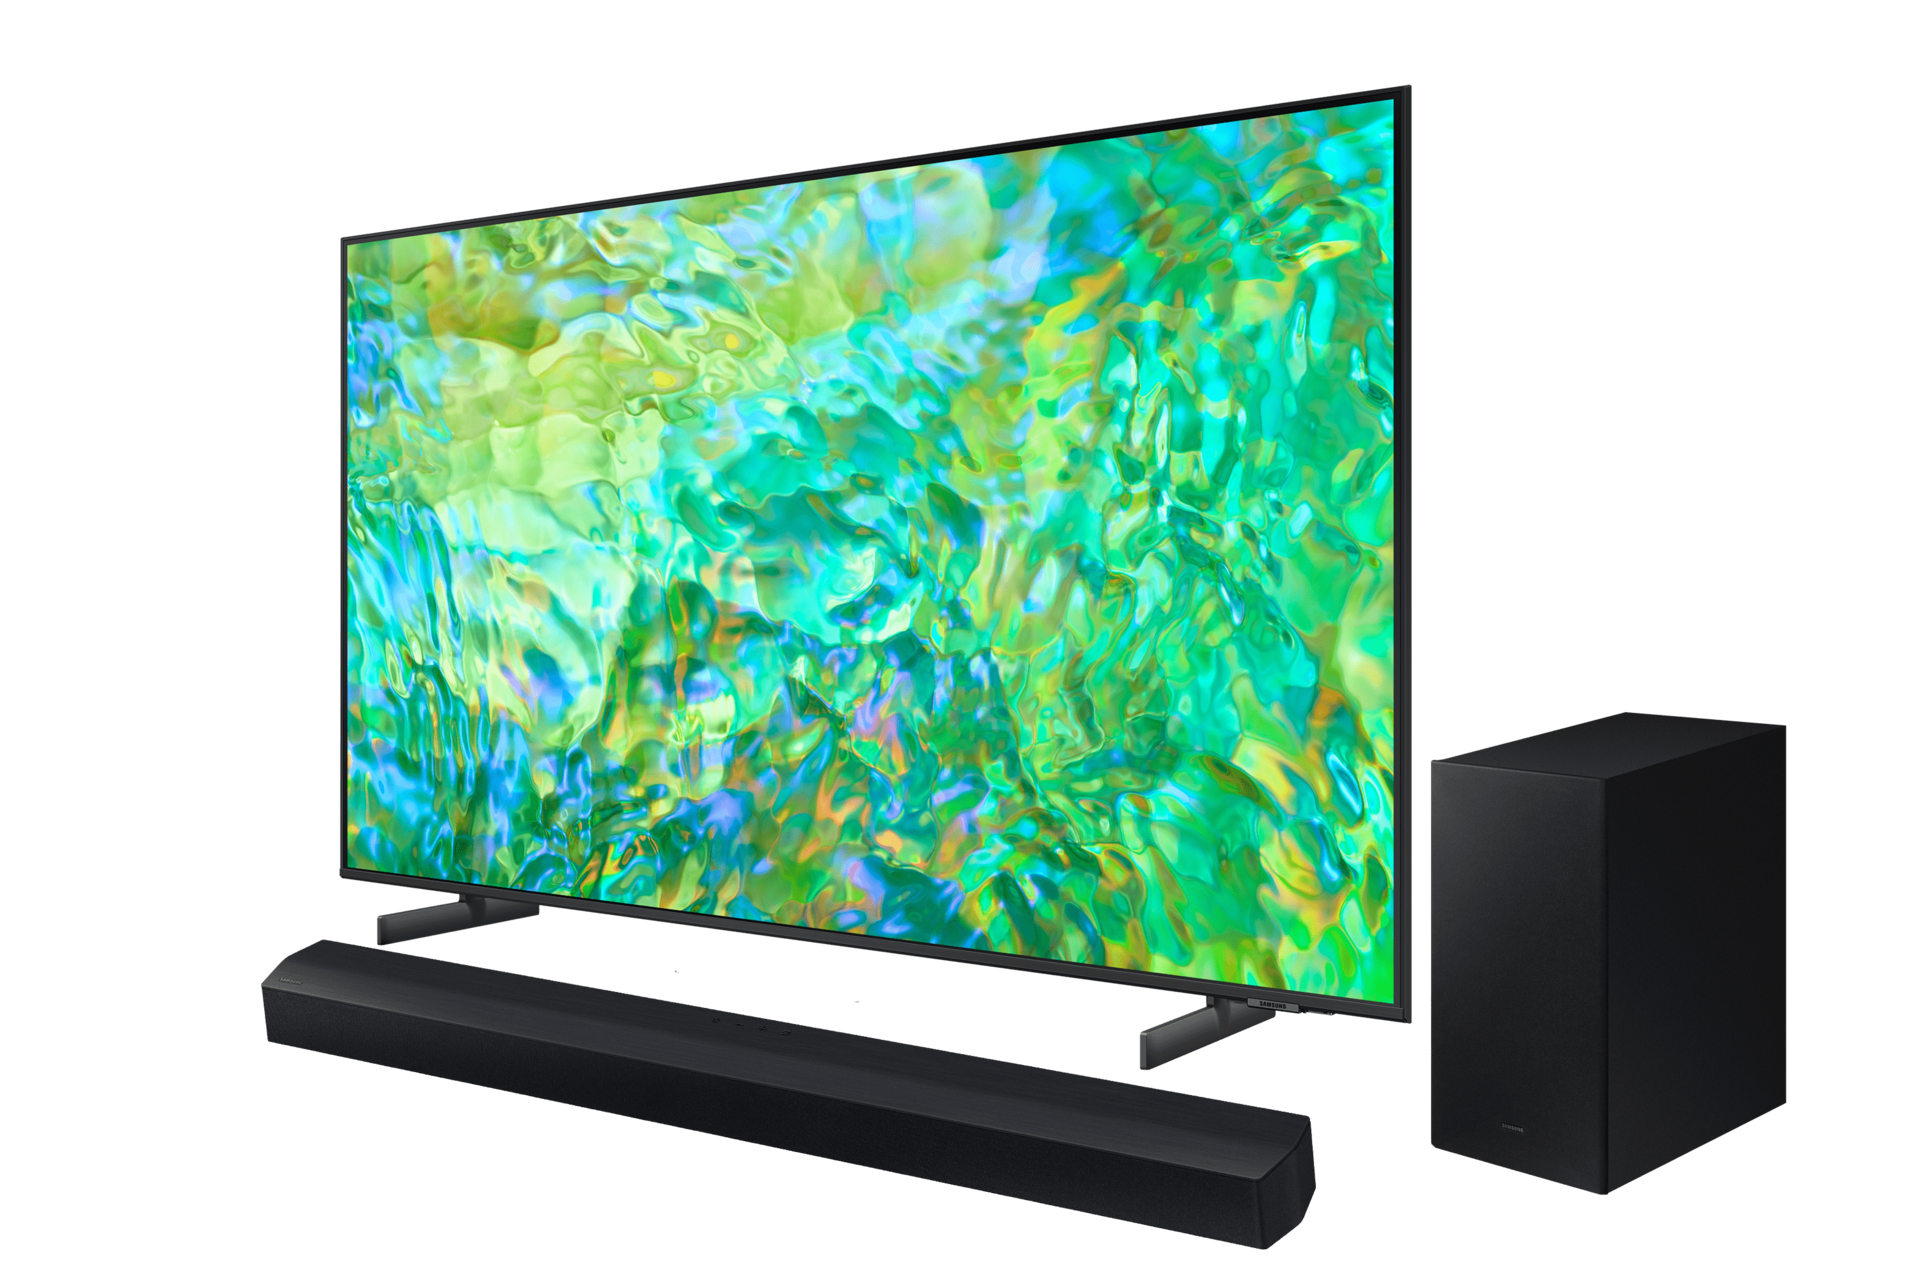 Televisor Samsung Smart Tv 65 Crystal Uhd 4k Un65cu8000gxpe (nuevo)  SAMSUNG